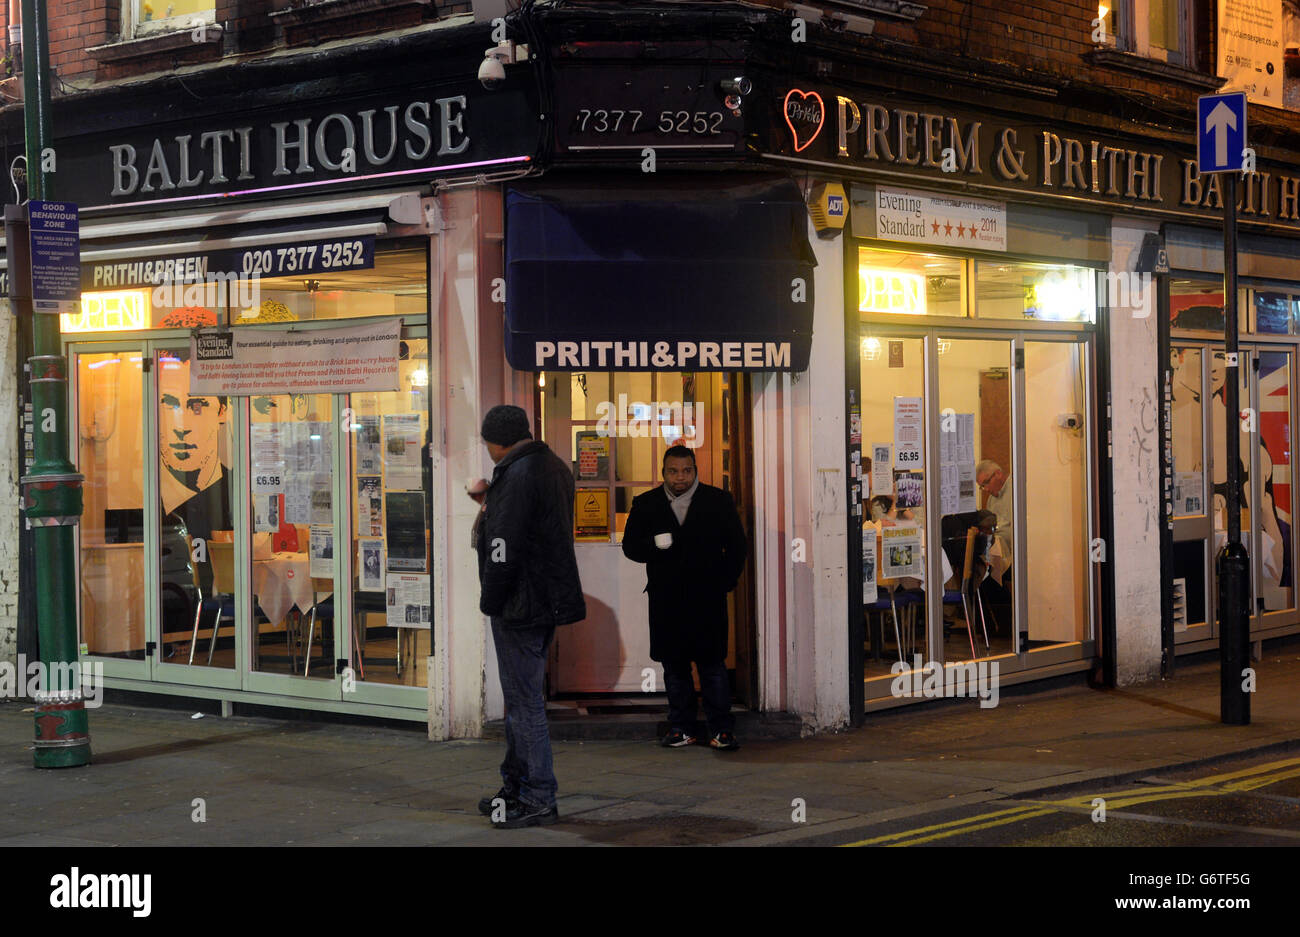 Preem & Prithi Indian restaurant in Brick Lane, East London. Stock Photo